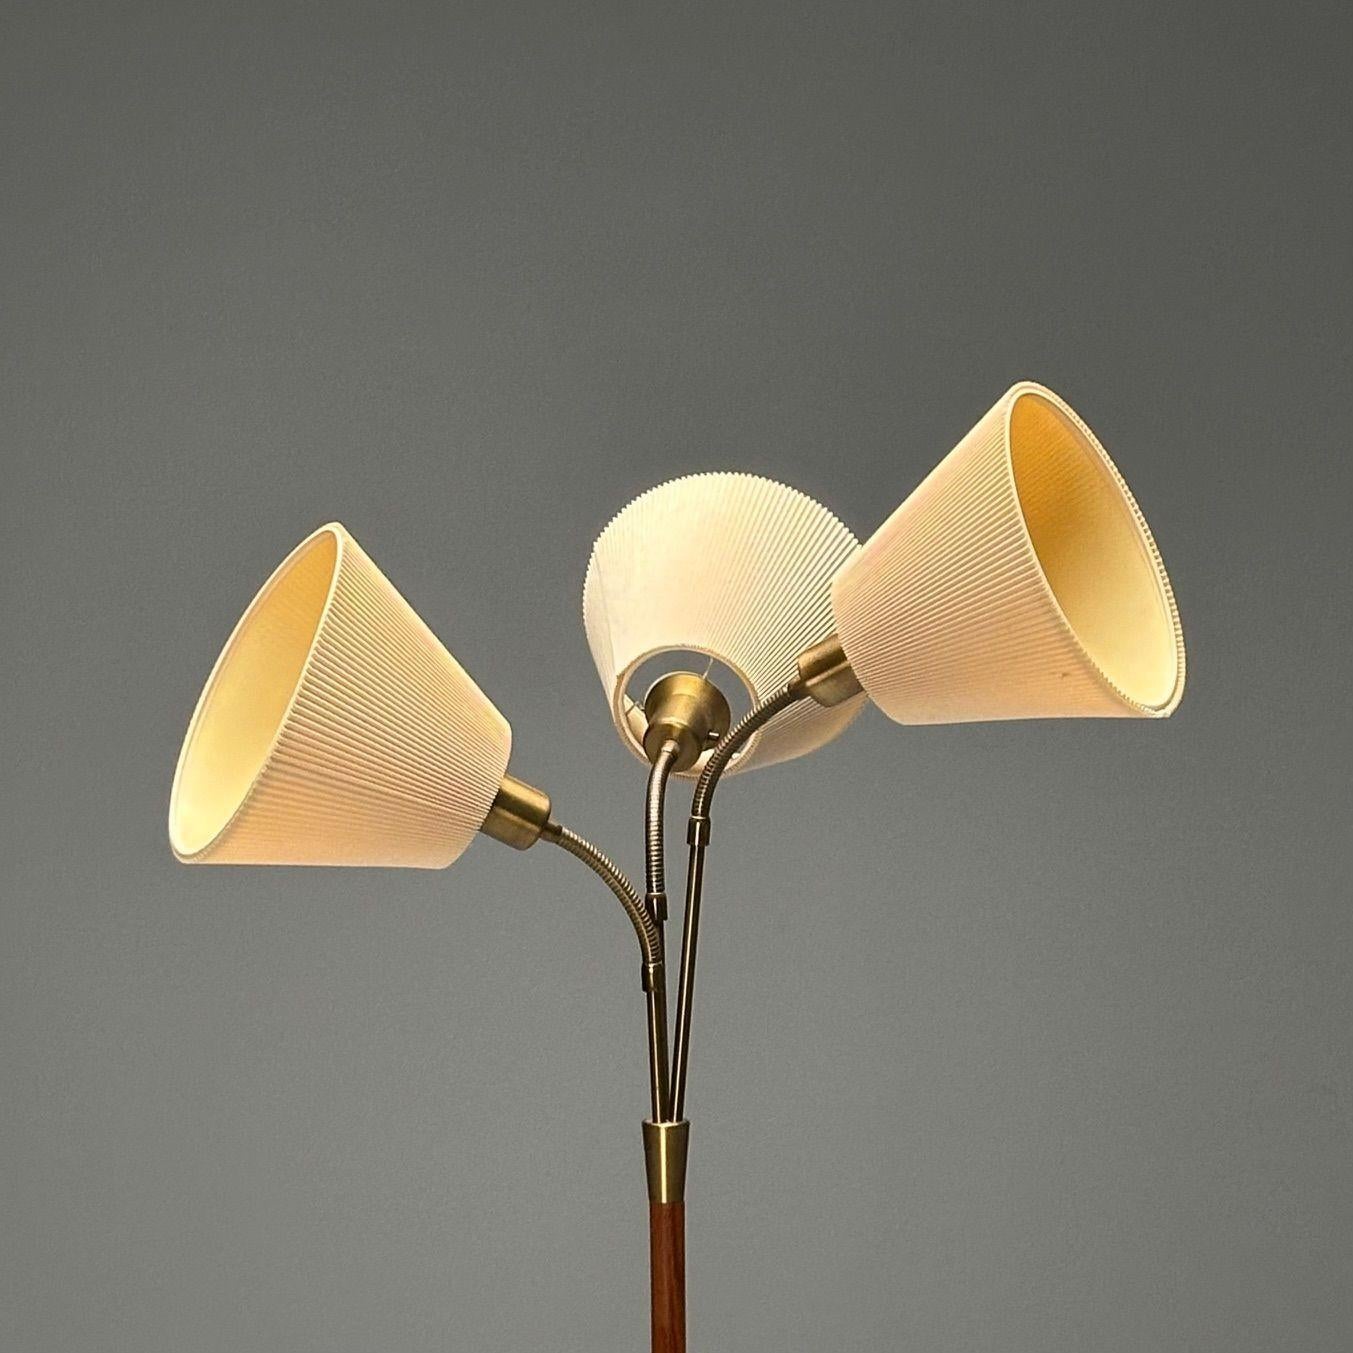 Mid-20th Century Nybro Armaturfabrik, Swedish Mid-Century Modern, Floor Lamp, Teak, Brass, 1950s For Sale